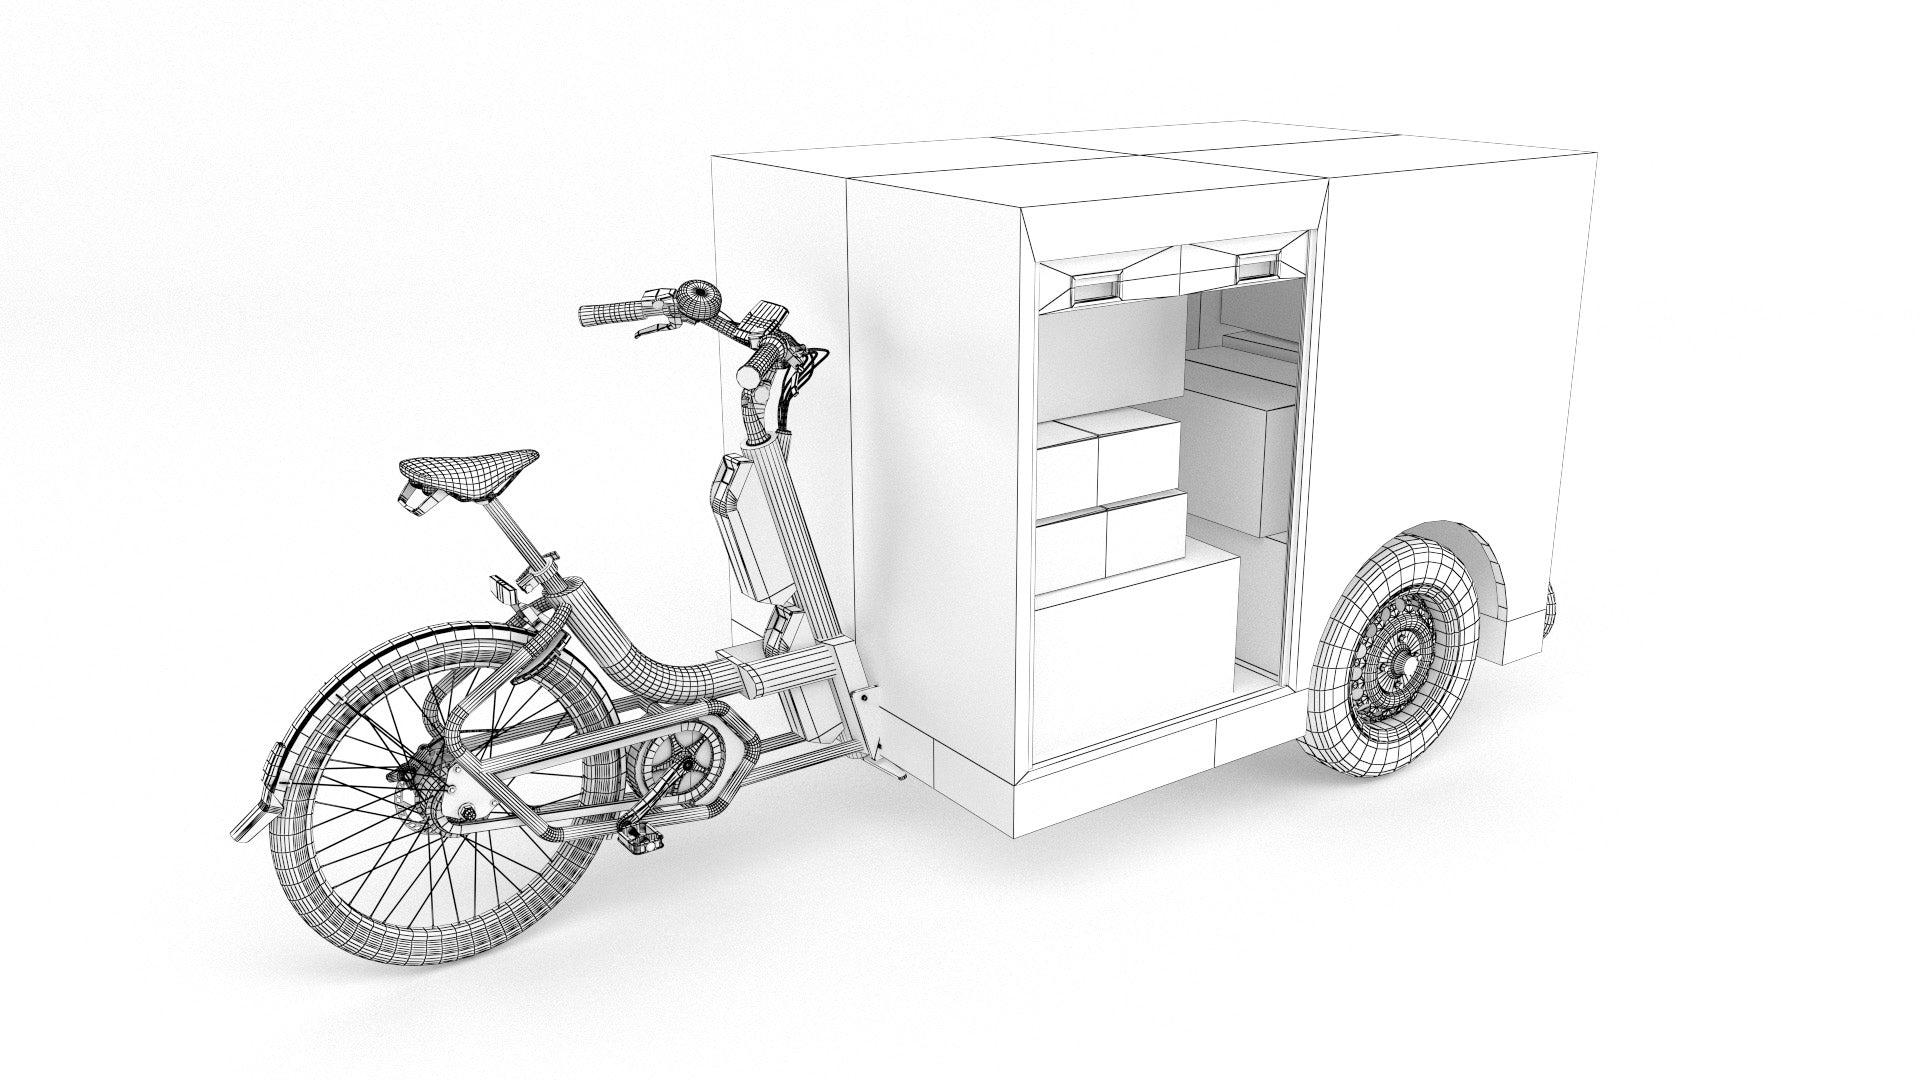 Post Nl delivery bike 3D Model